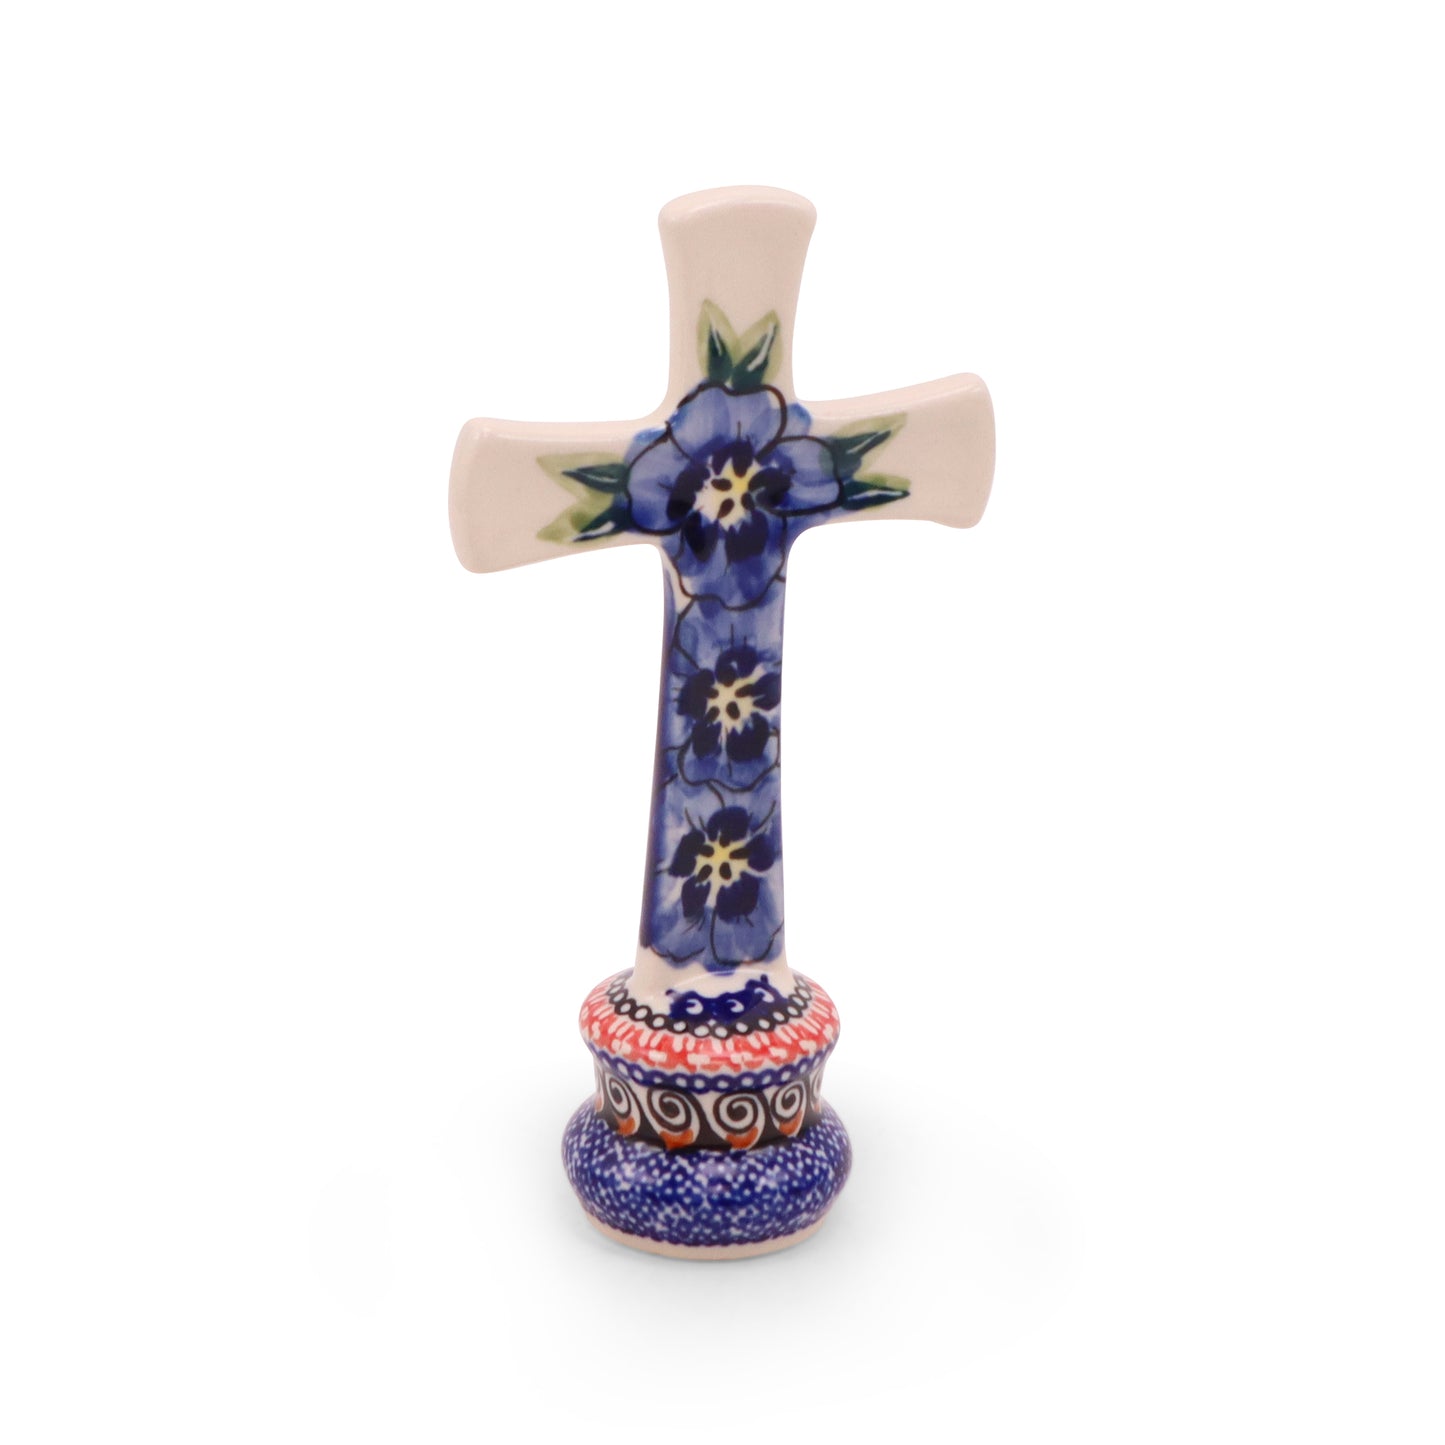 4"x7" Cross Figurine. Pattern: Very Violet